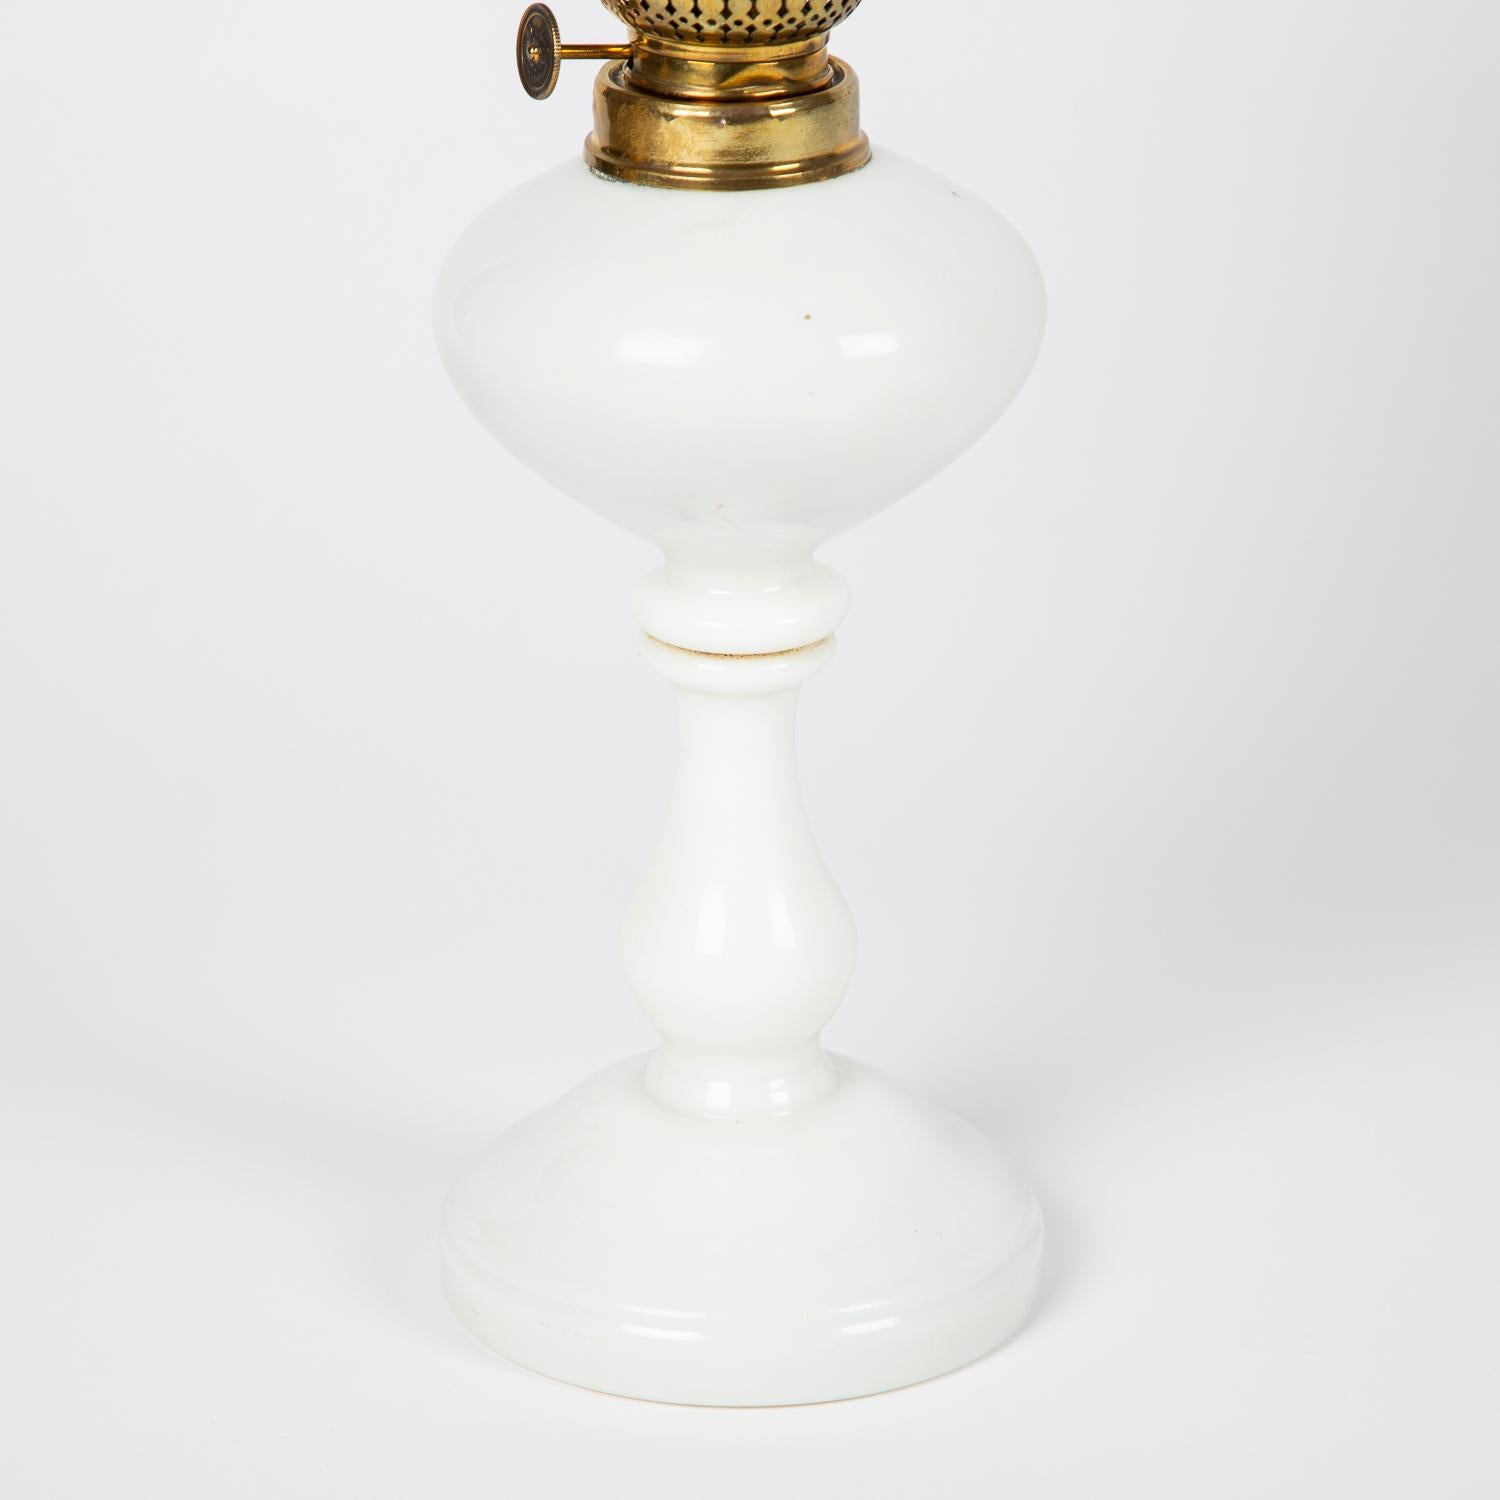 Oil Lamp with an Illuminating Globe Shade, Bohemian, circa 1885 For Sale 2